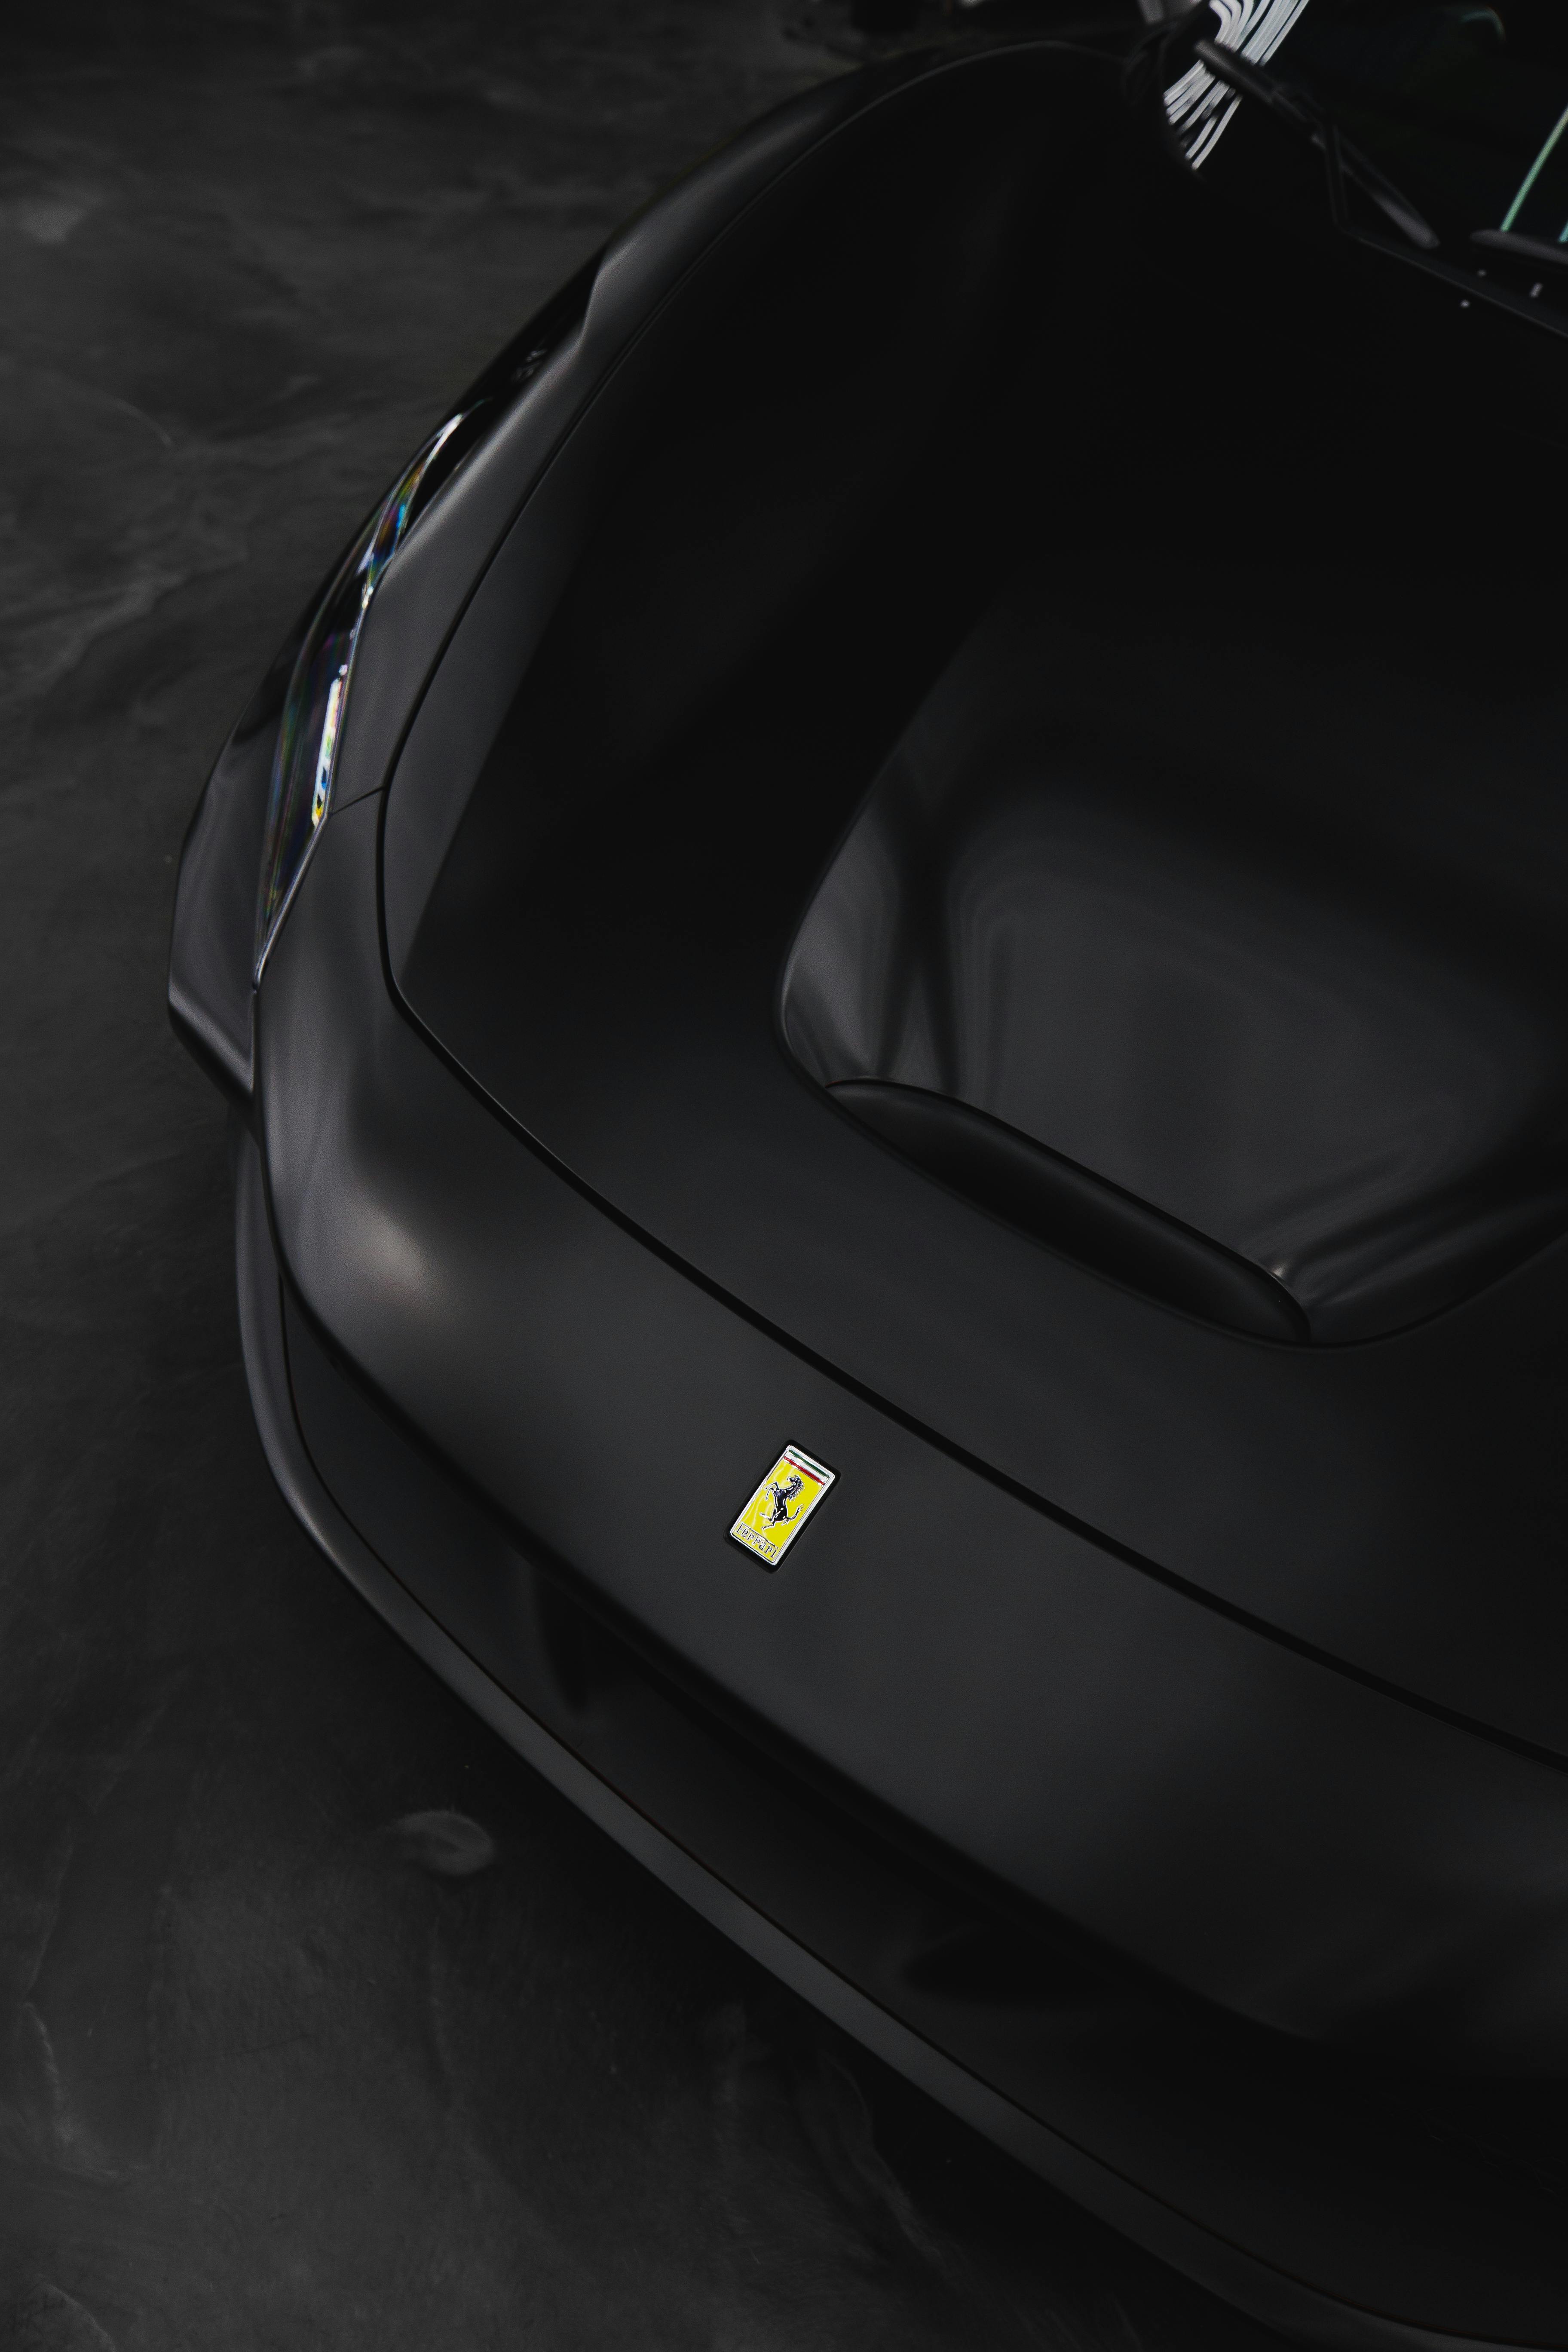 Black Ferrari Car on Gray Pavement · Free Stock Photo